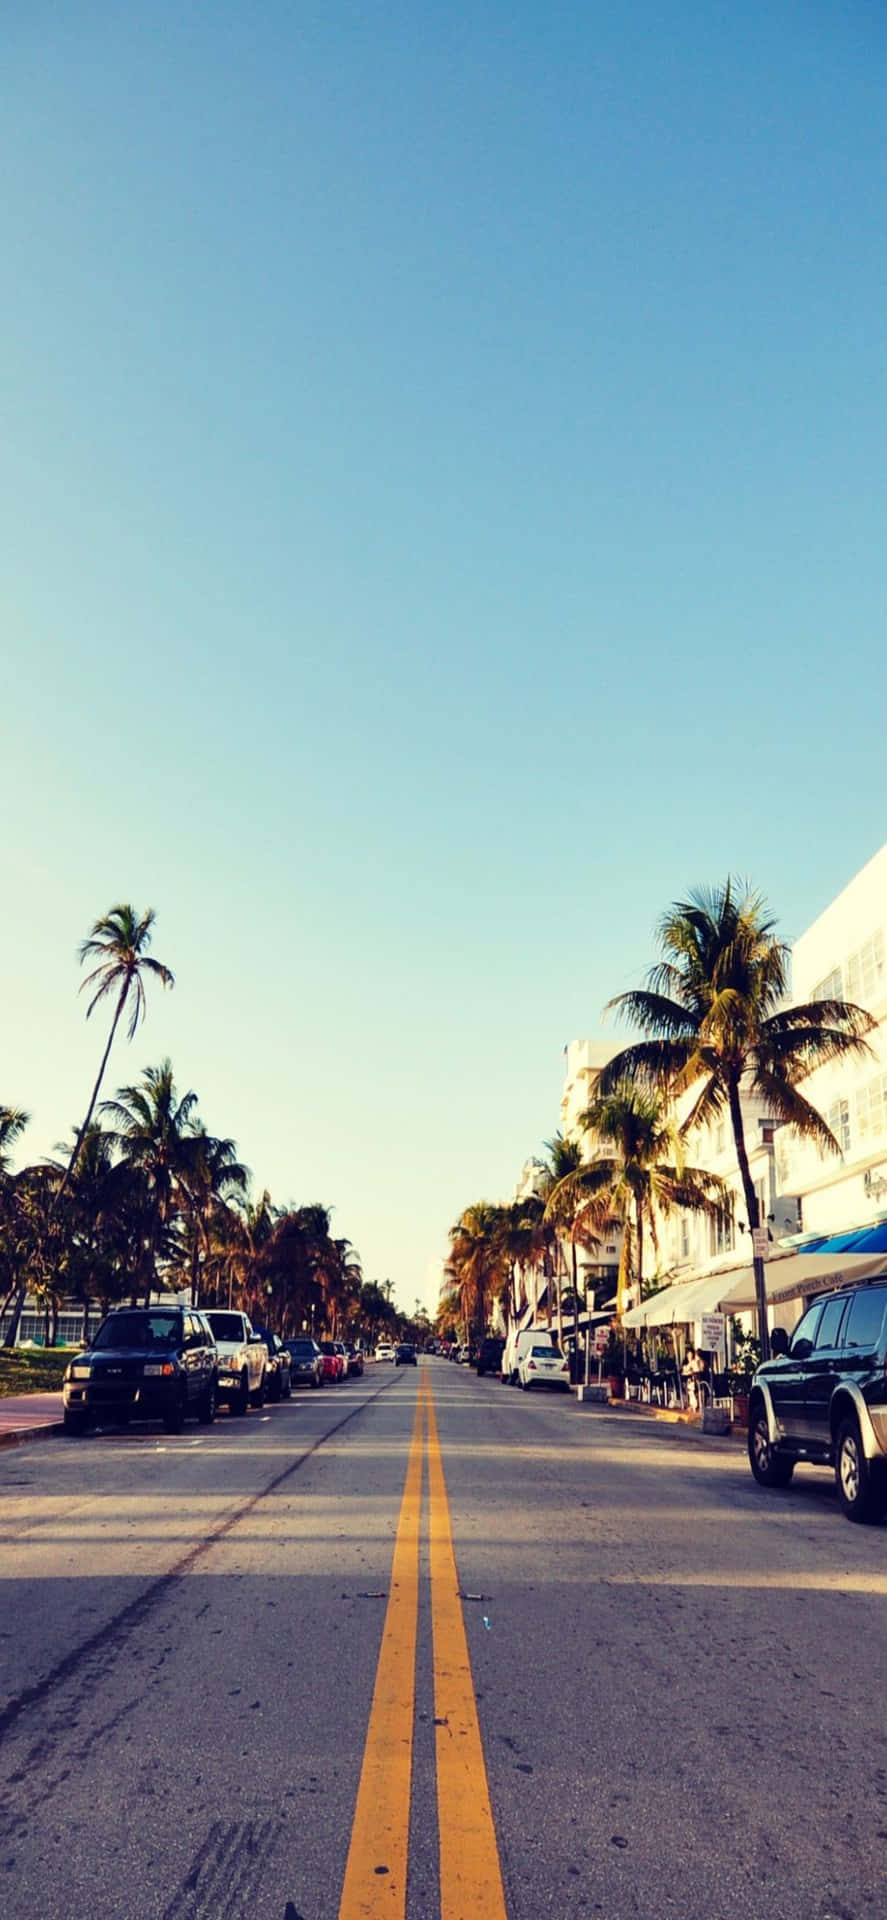 Iphonexs Miami Beach-bakgrund.